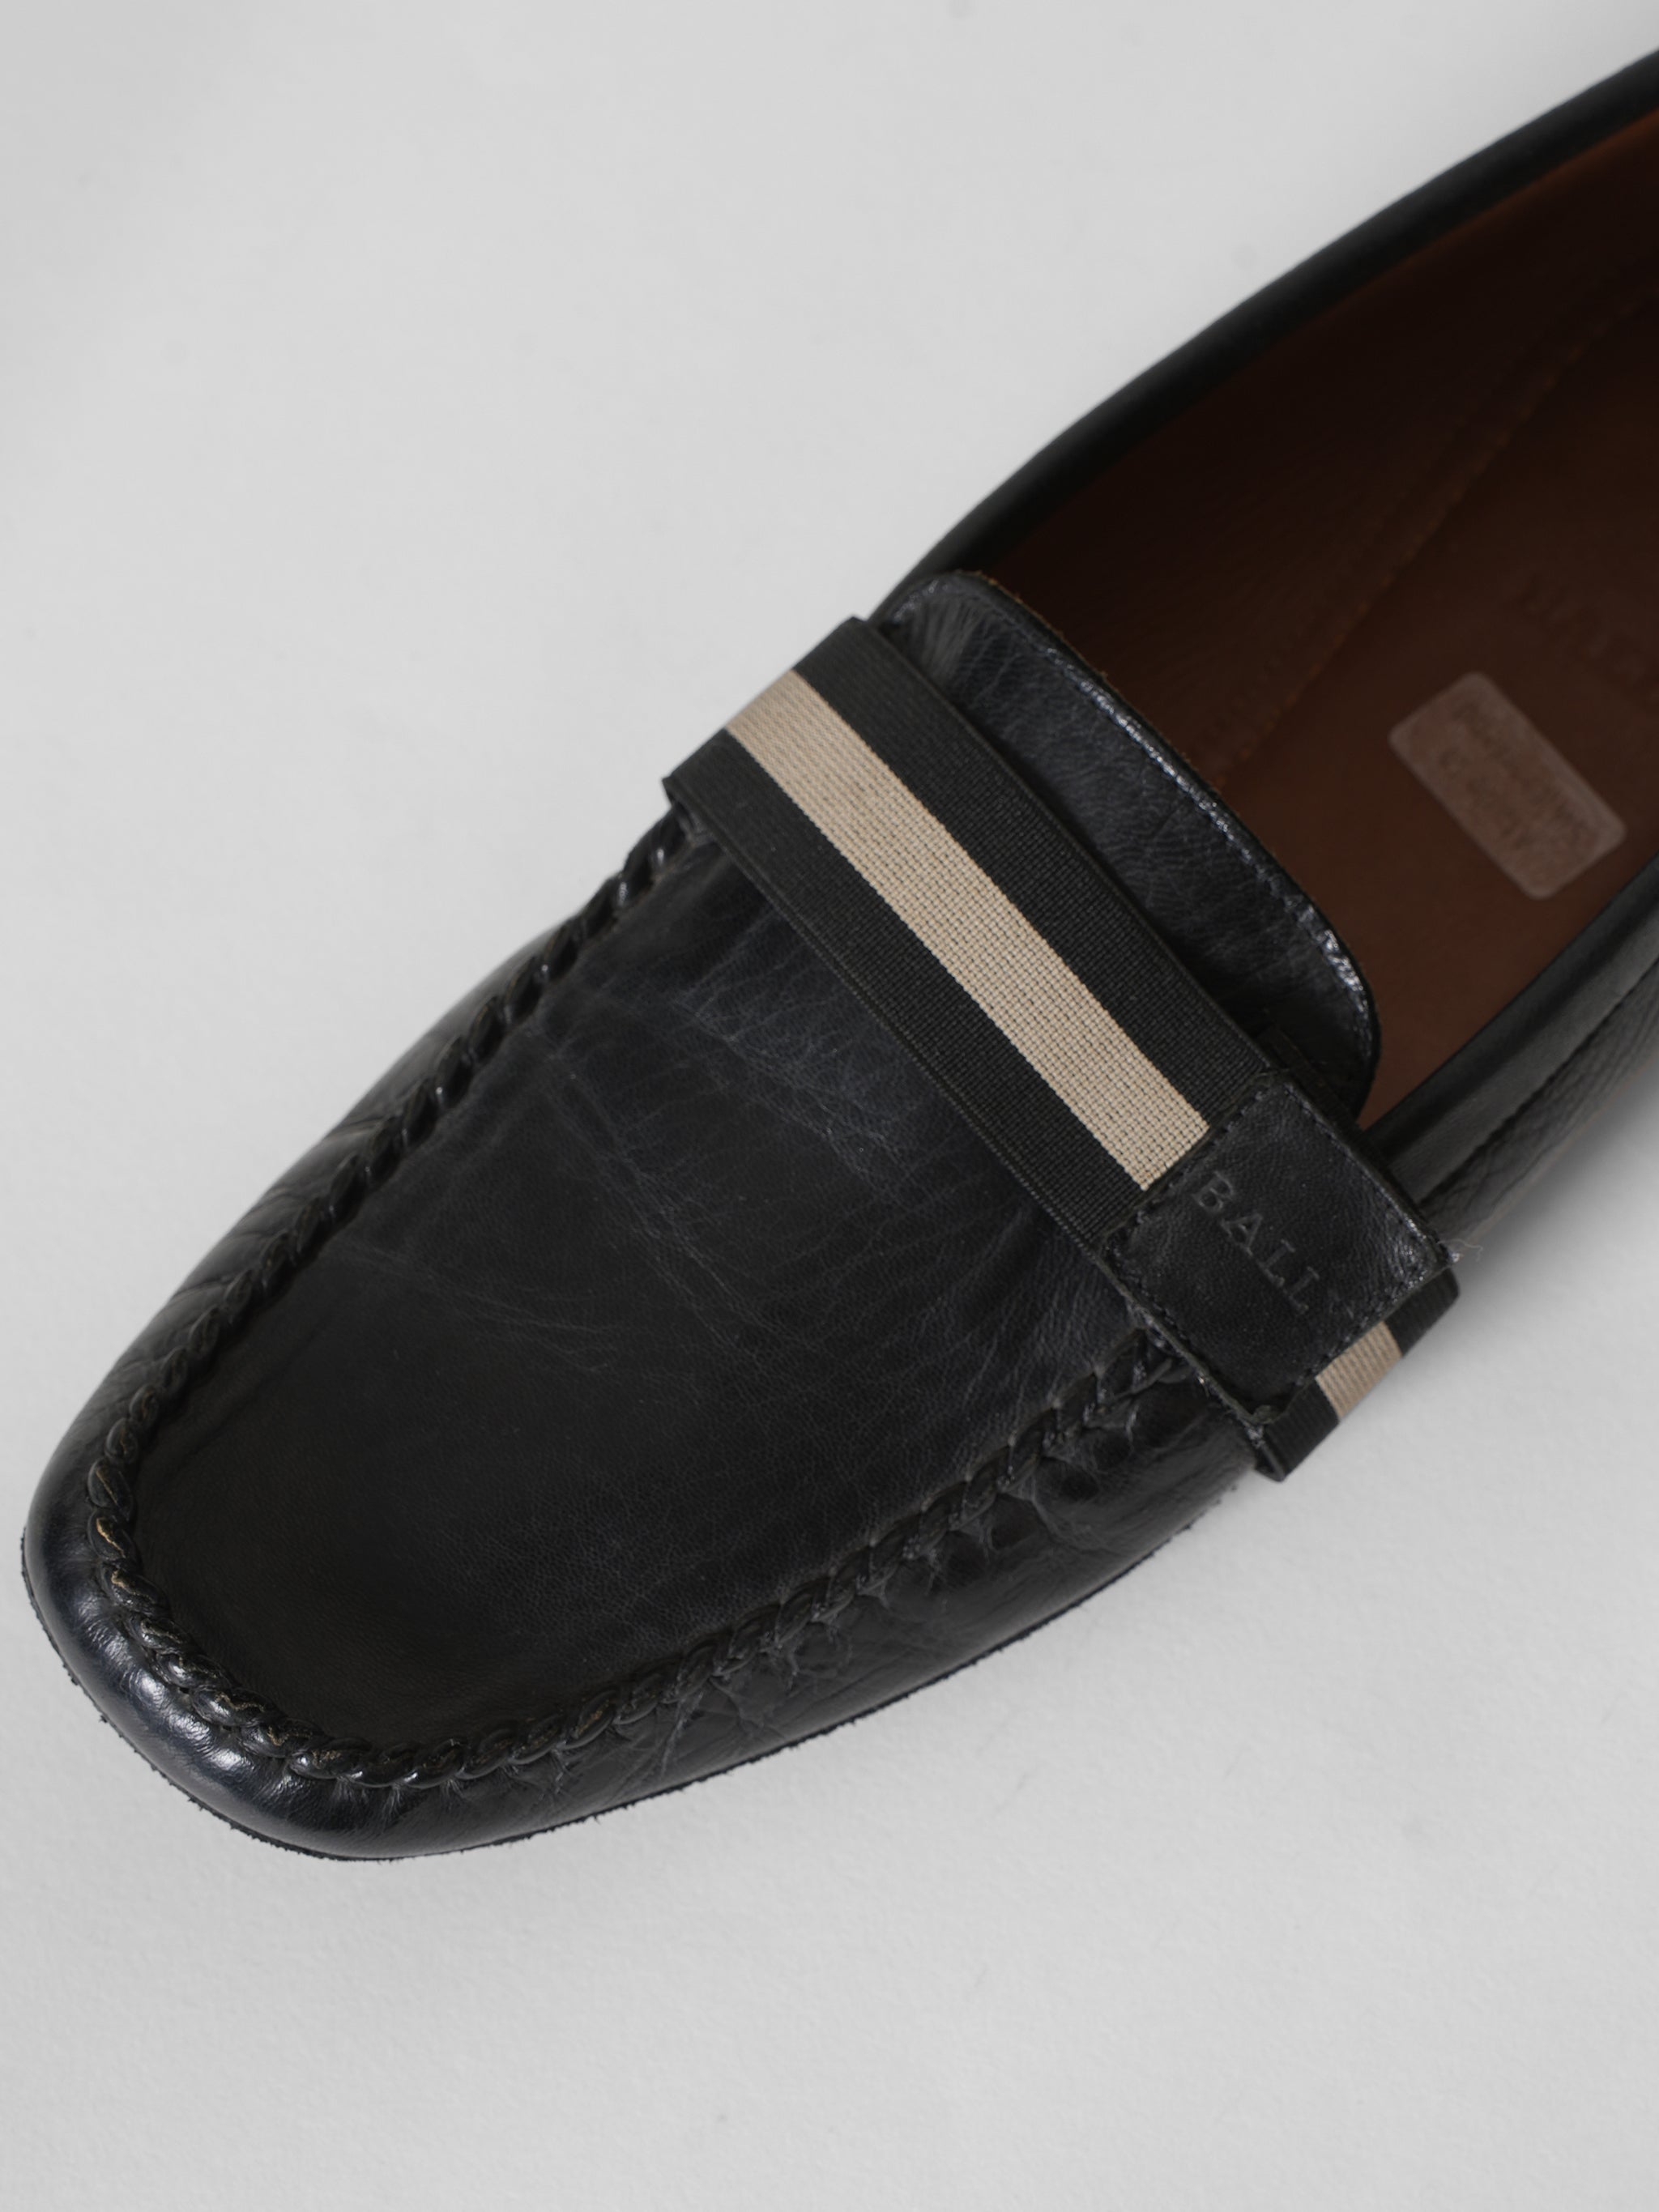 Bally Kansan Leather Shoes